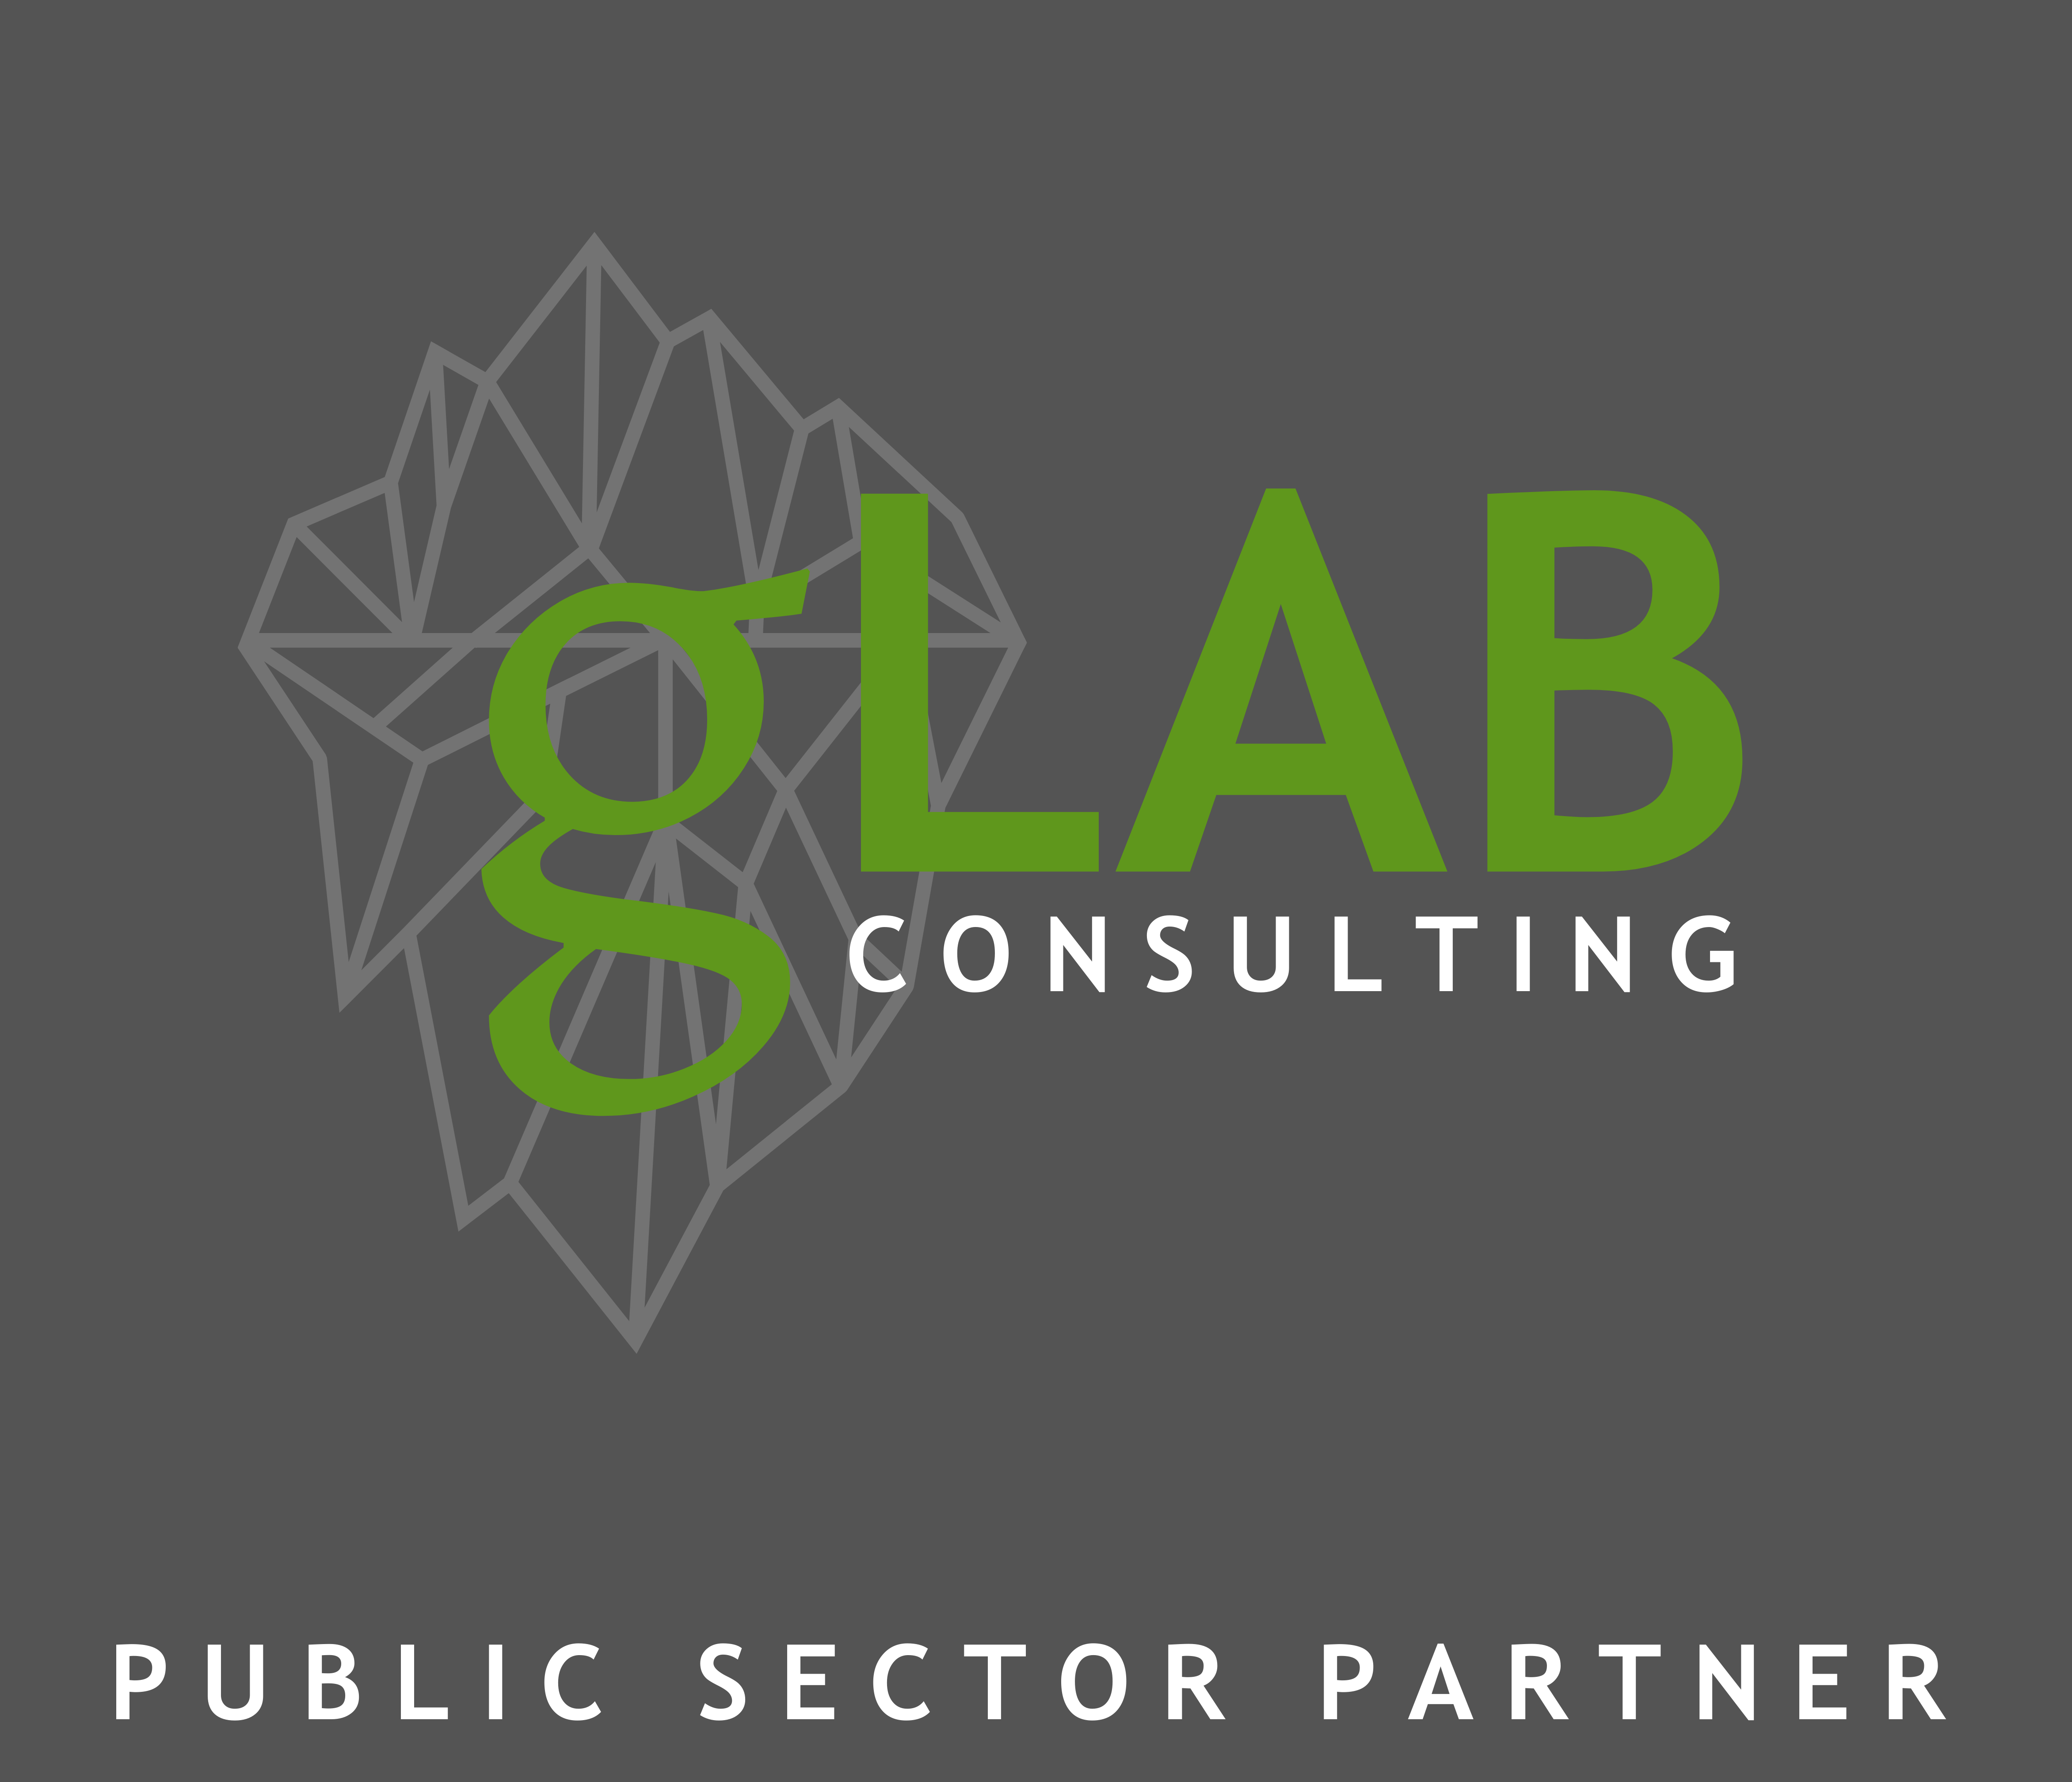 gLAB – Public Sector Partner